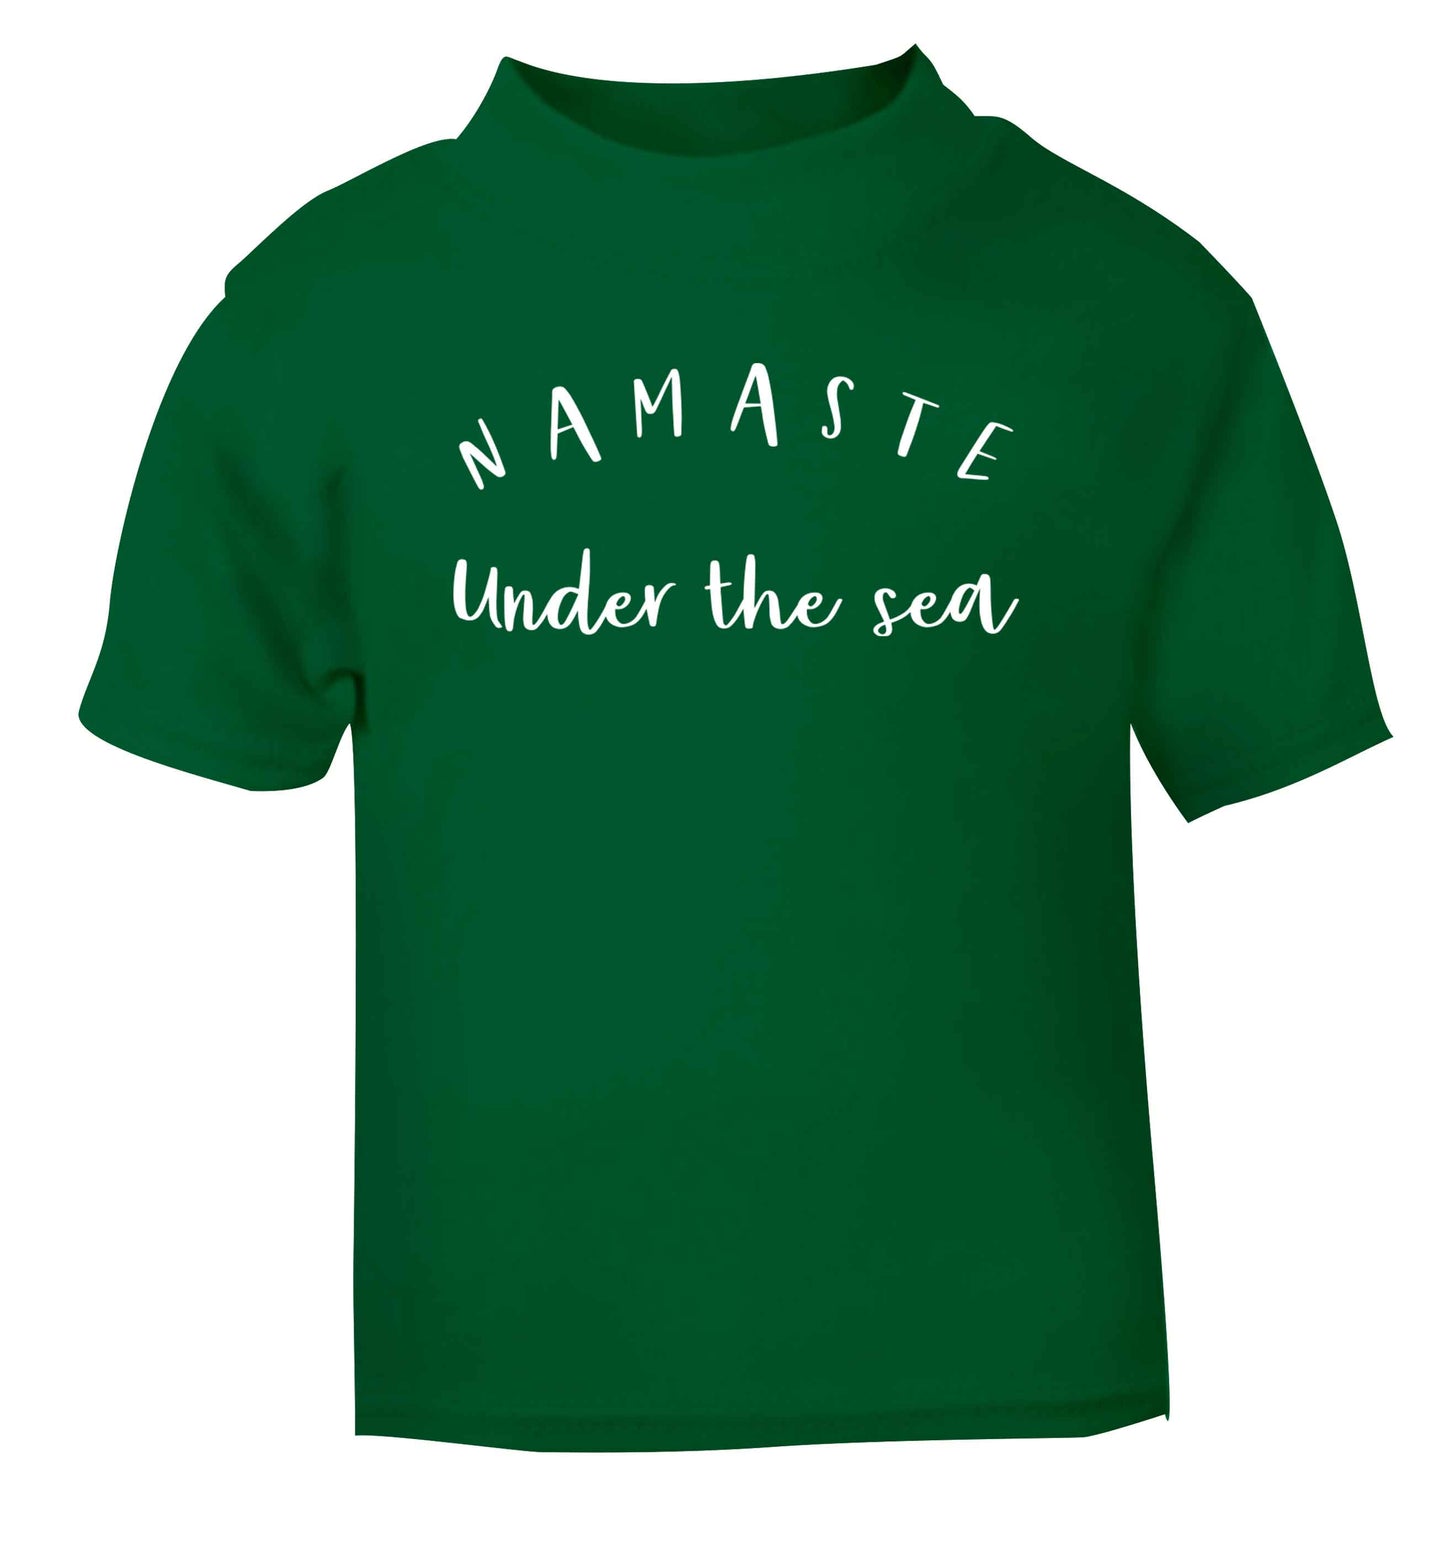 Namaste under the water green Baby Toddler Tshirt 2 Years